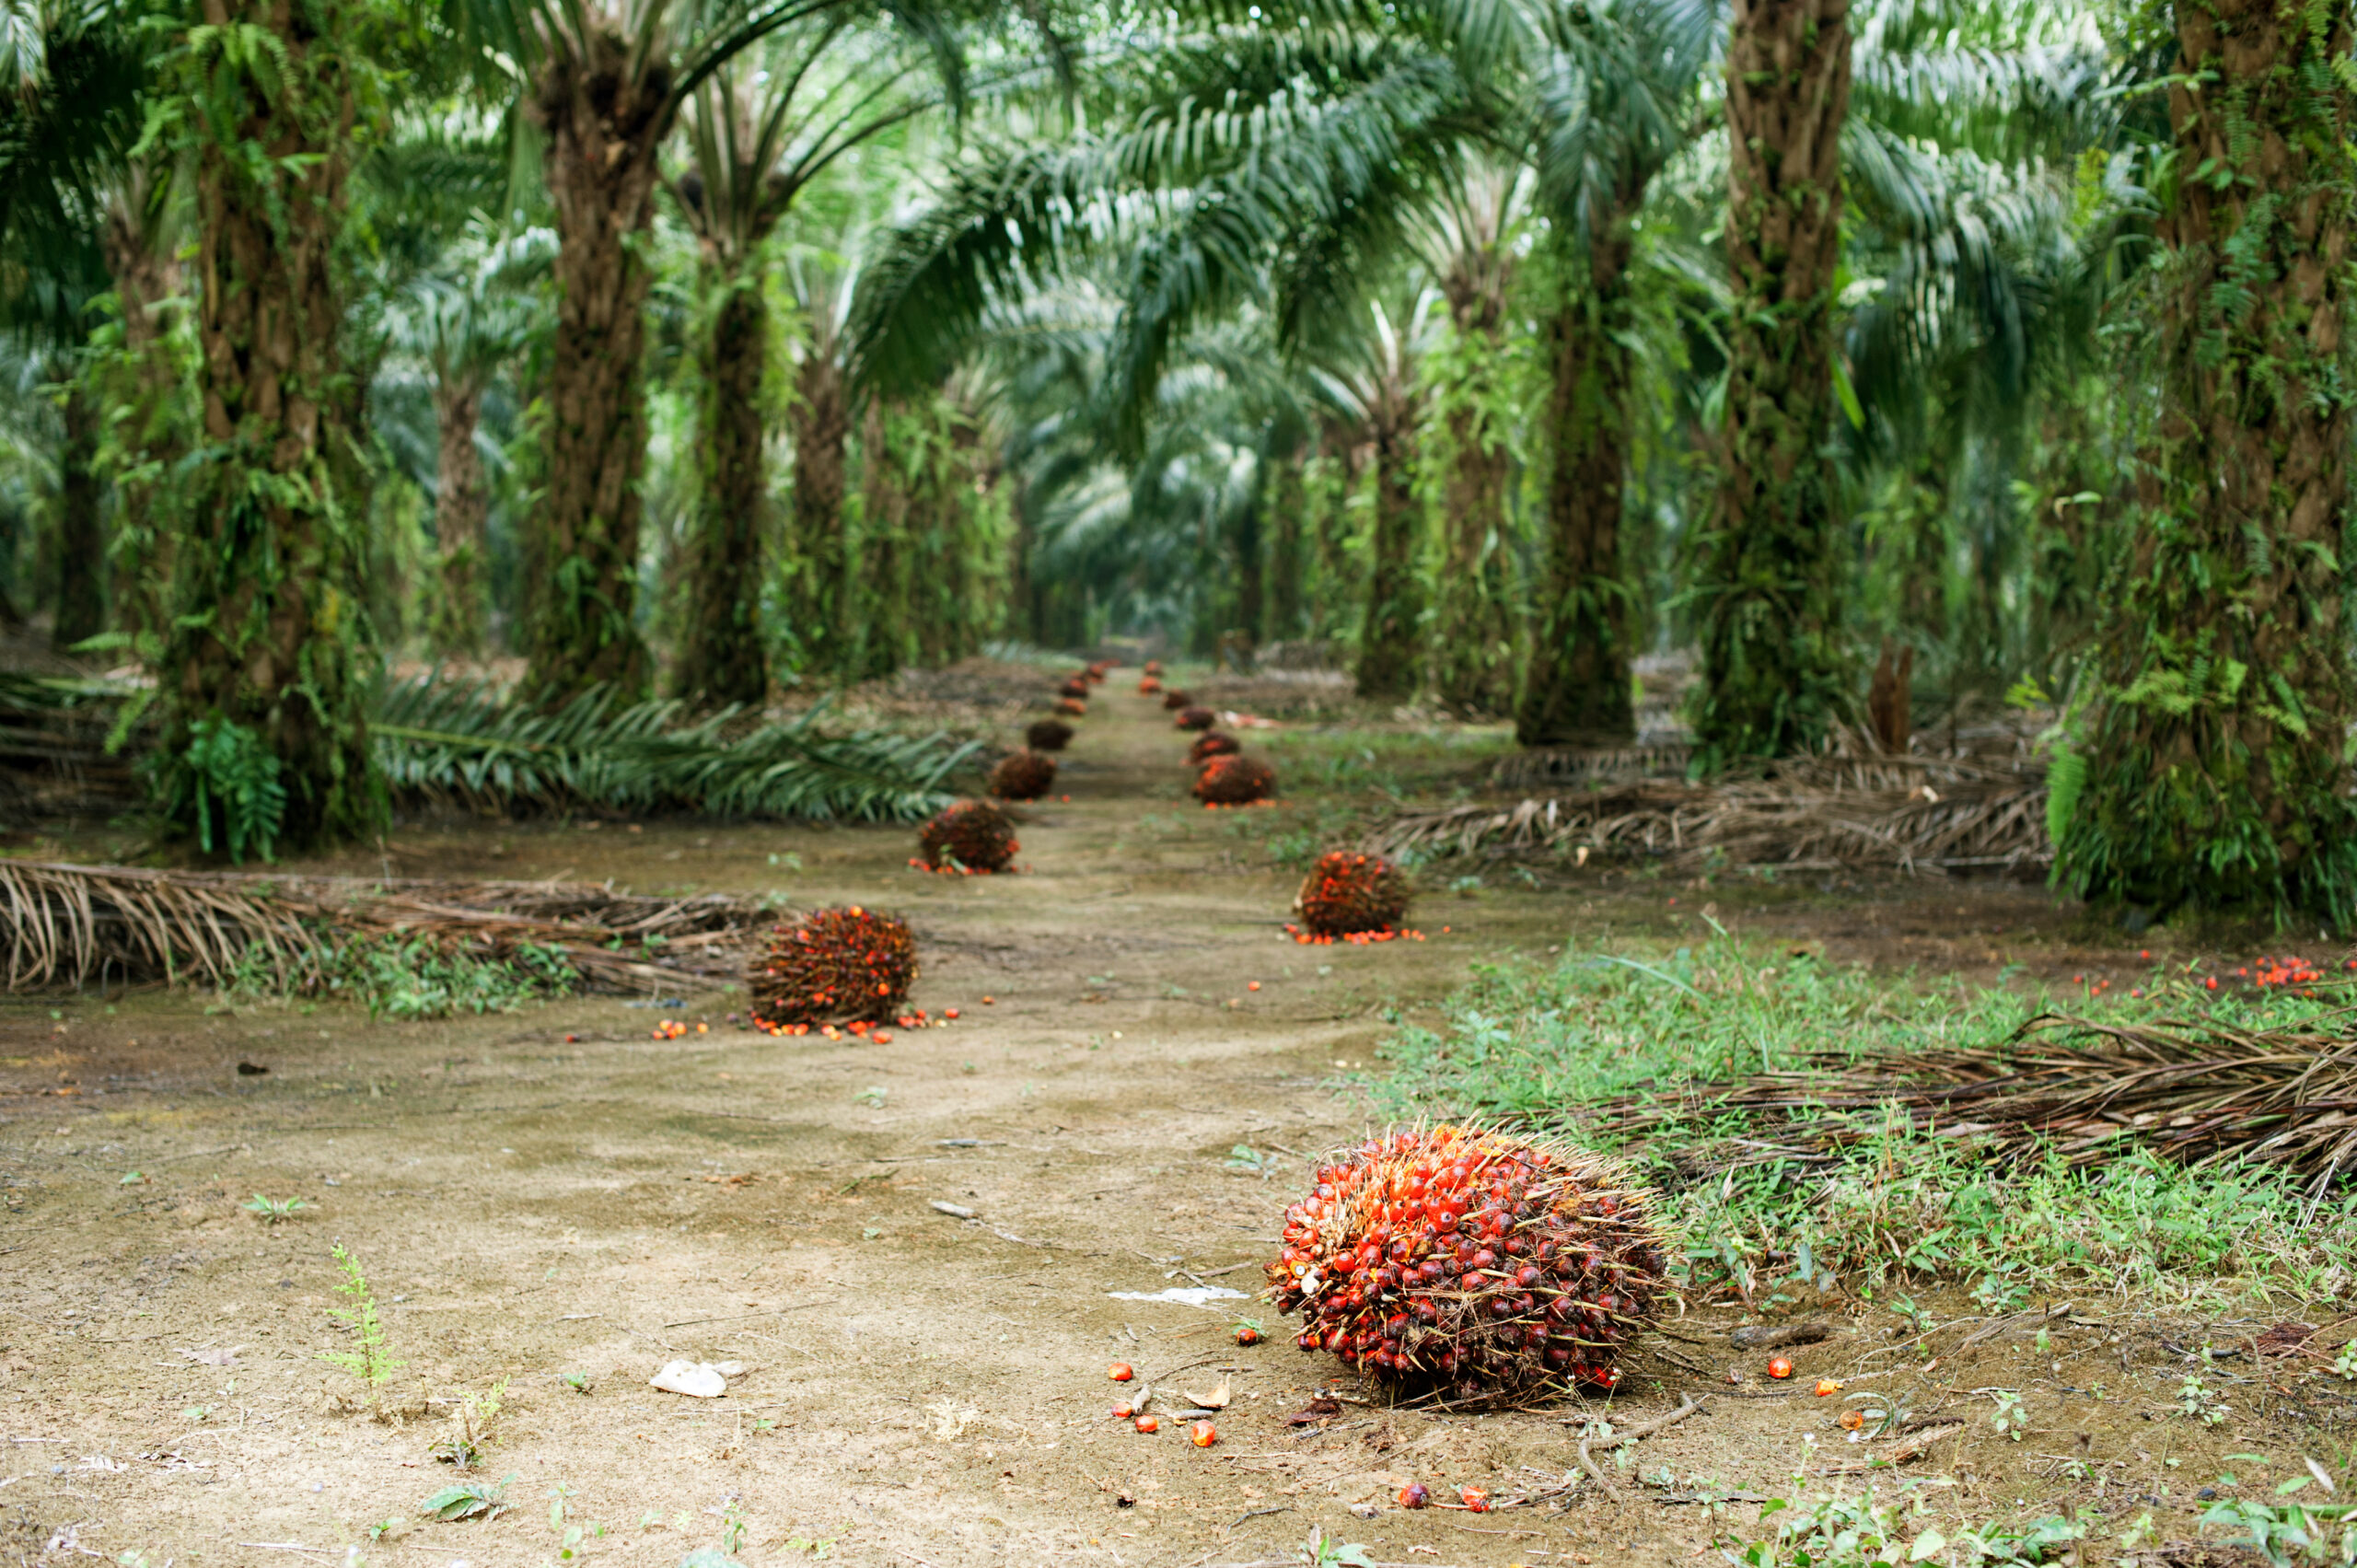 Musim Mas oil palm plantation